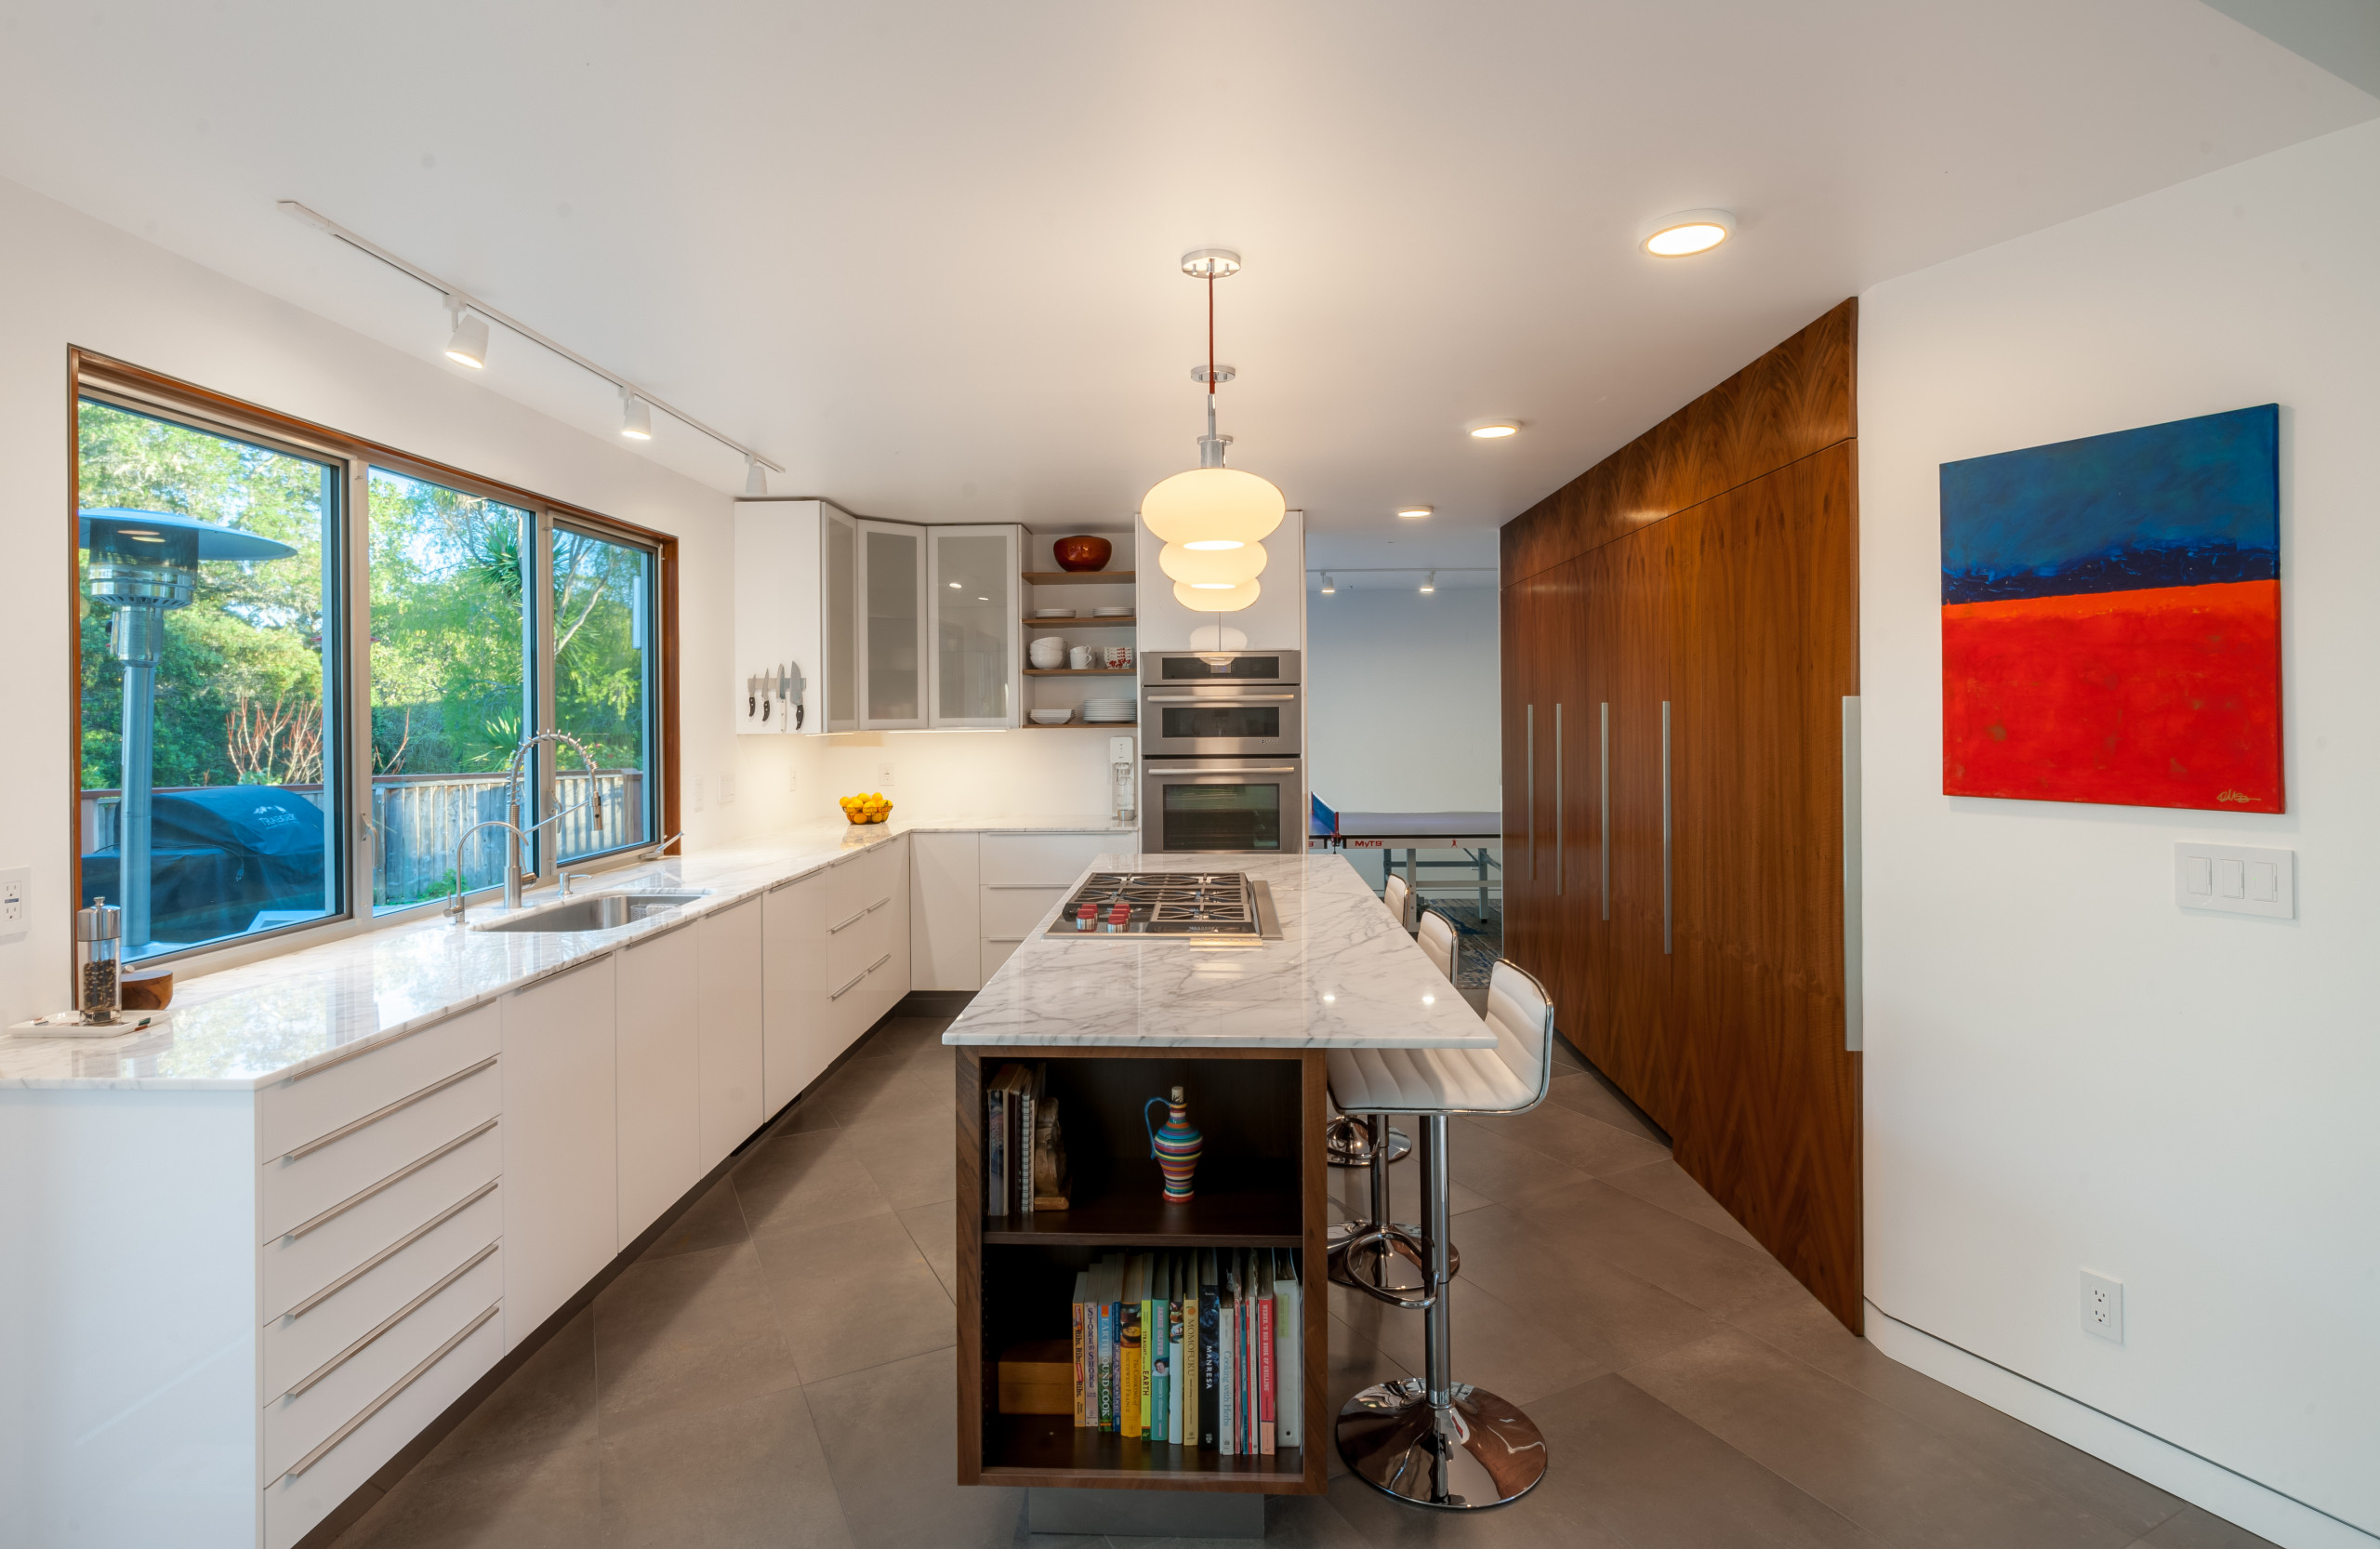 75 Mid-Century Modern Cement Tile Floor Kitchen Ideas You'll Love -  February, 2023 | Houzz